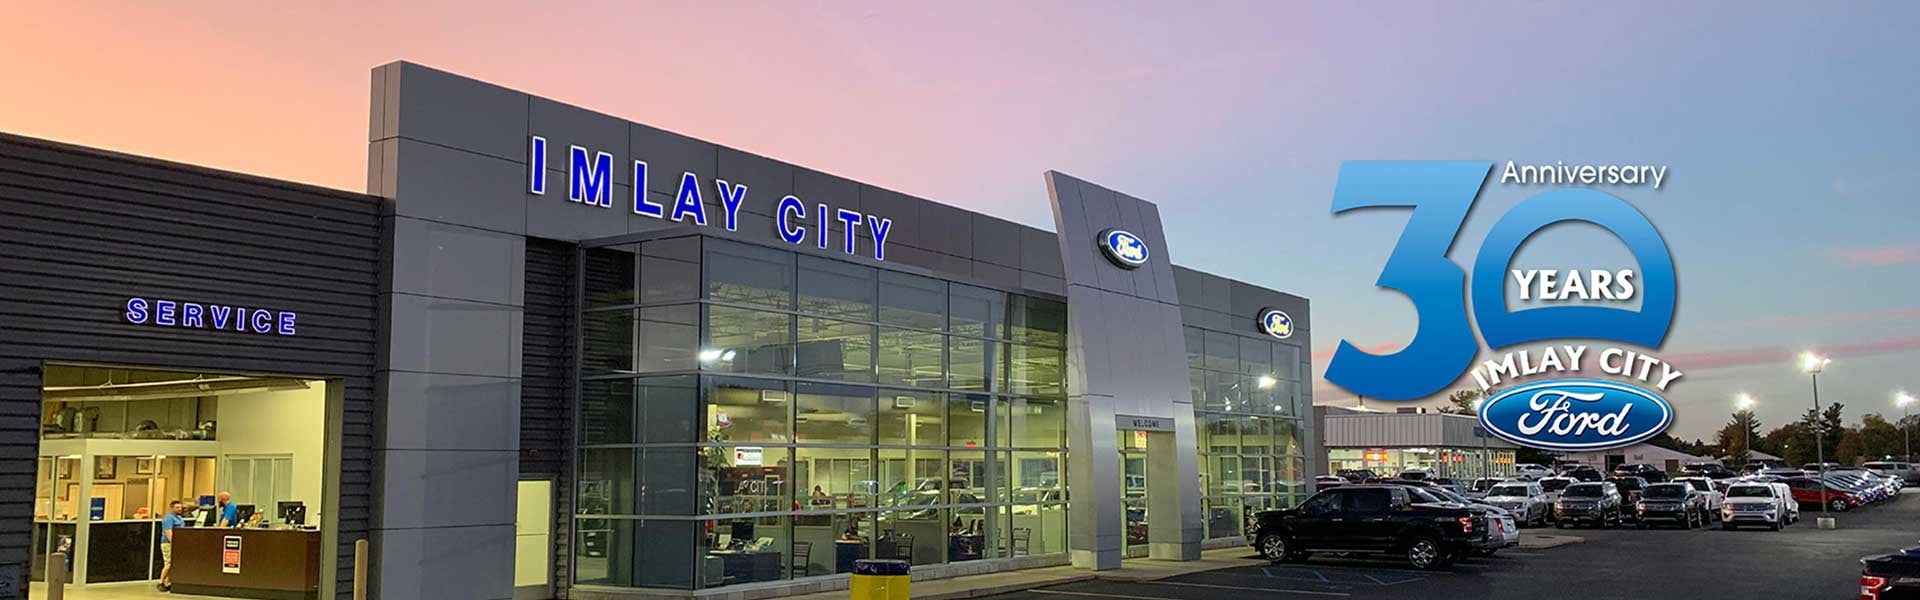 Imlay City Ford